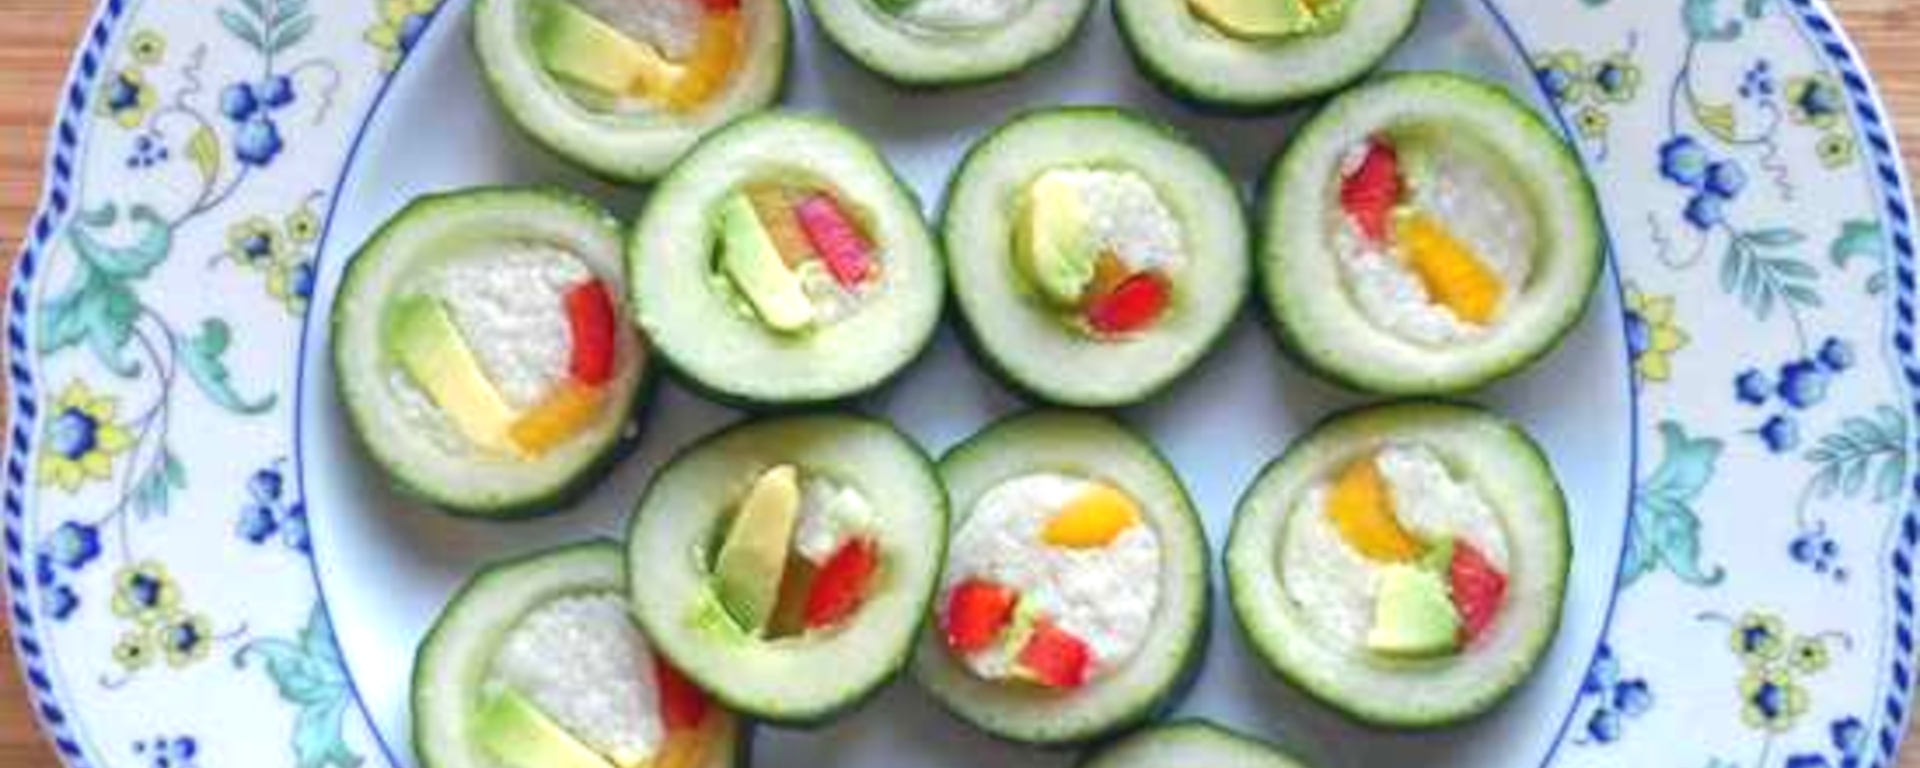 LuvMyRecipe.com - Amazing Cucumber Sushi Featured